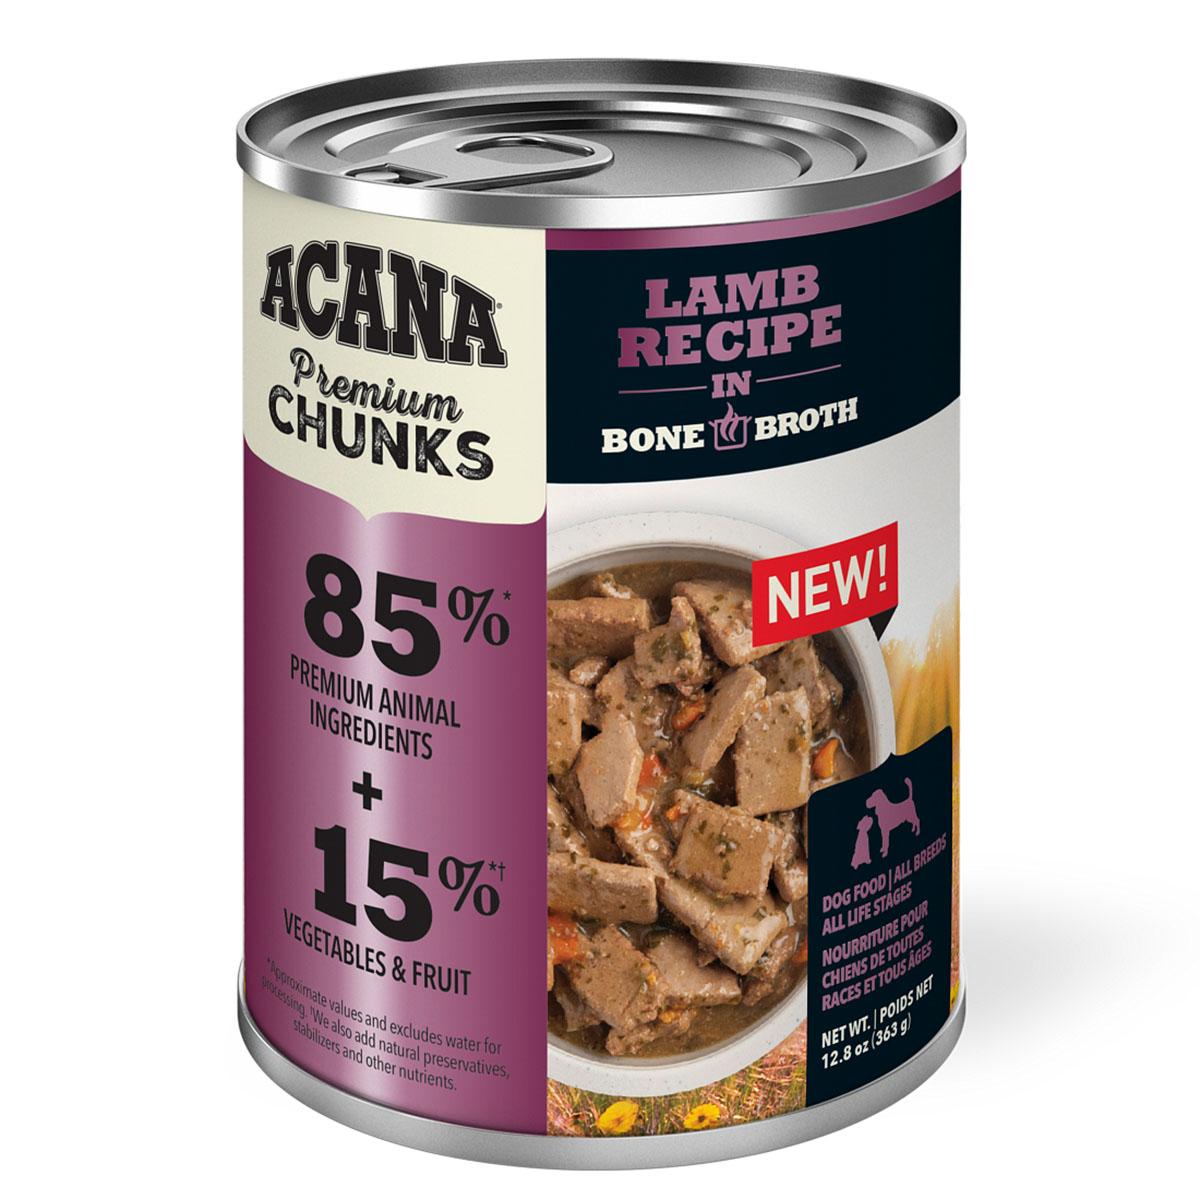 Acana Premium Chunks Lamb Recipe in Bone Broth Canned Dog Food